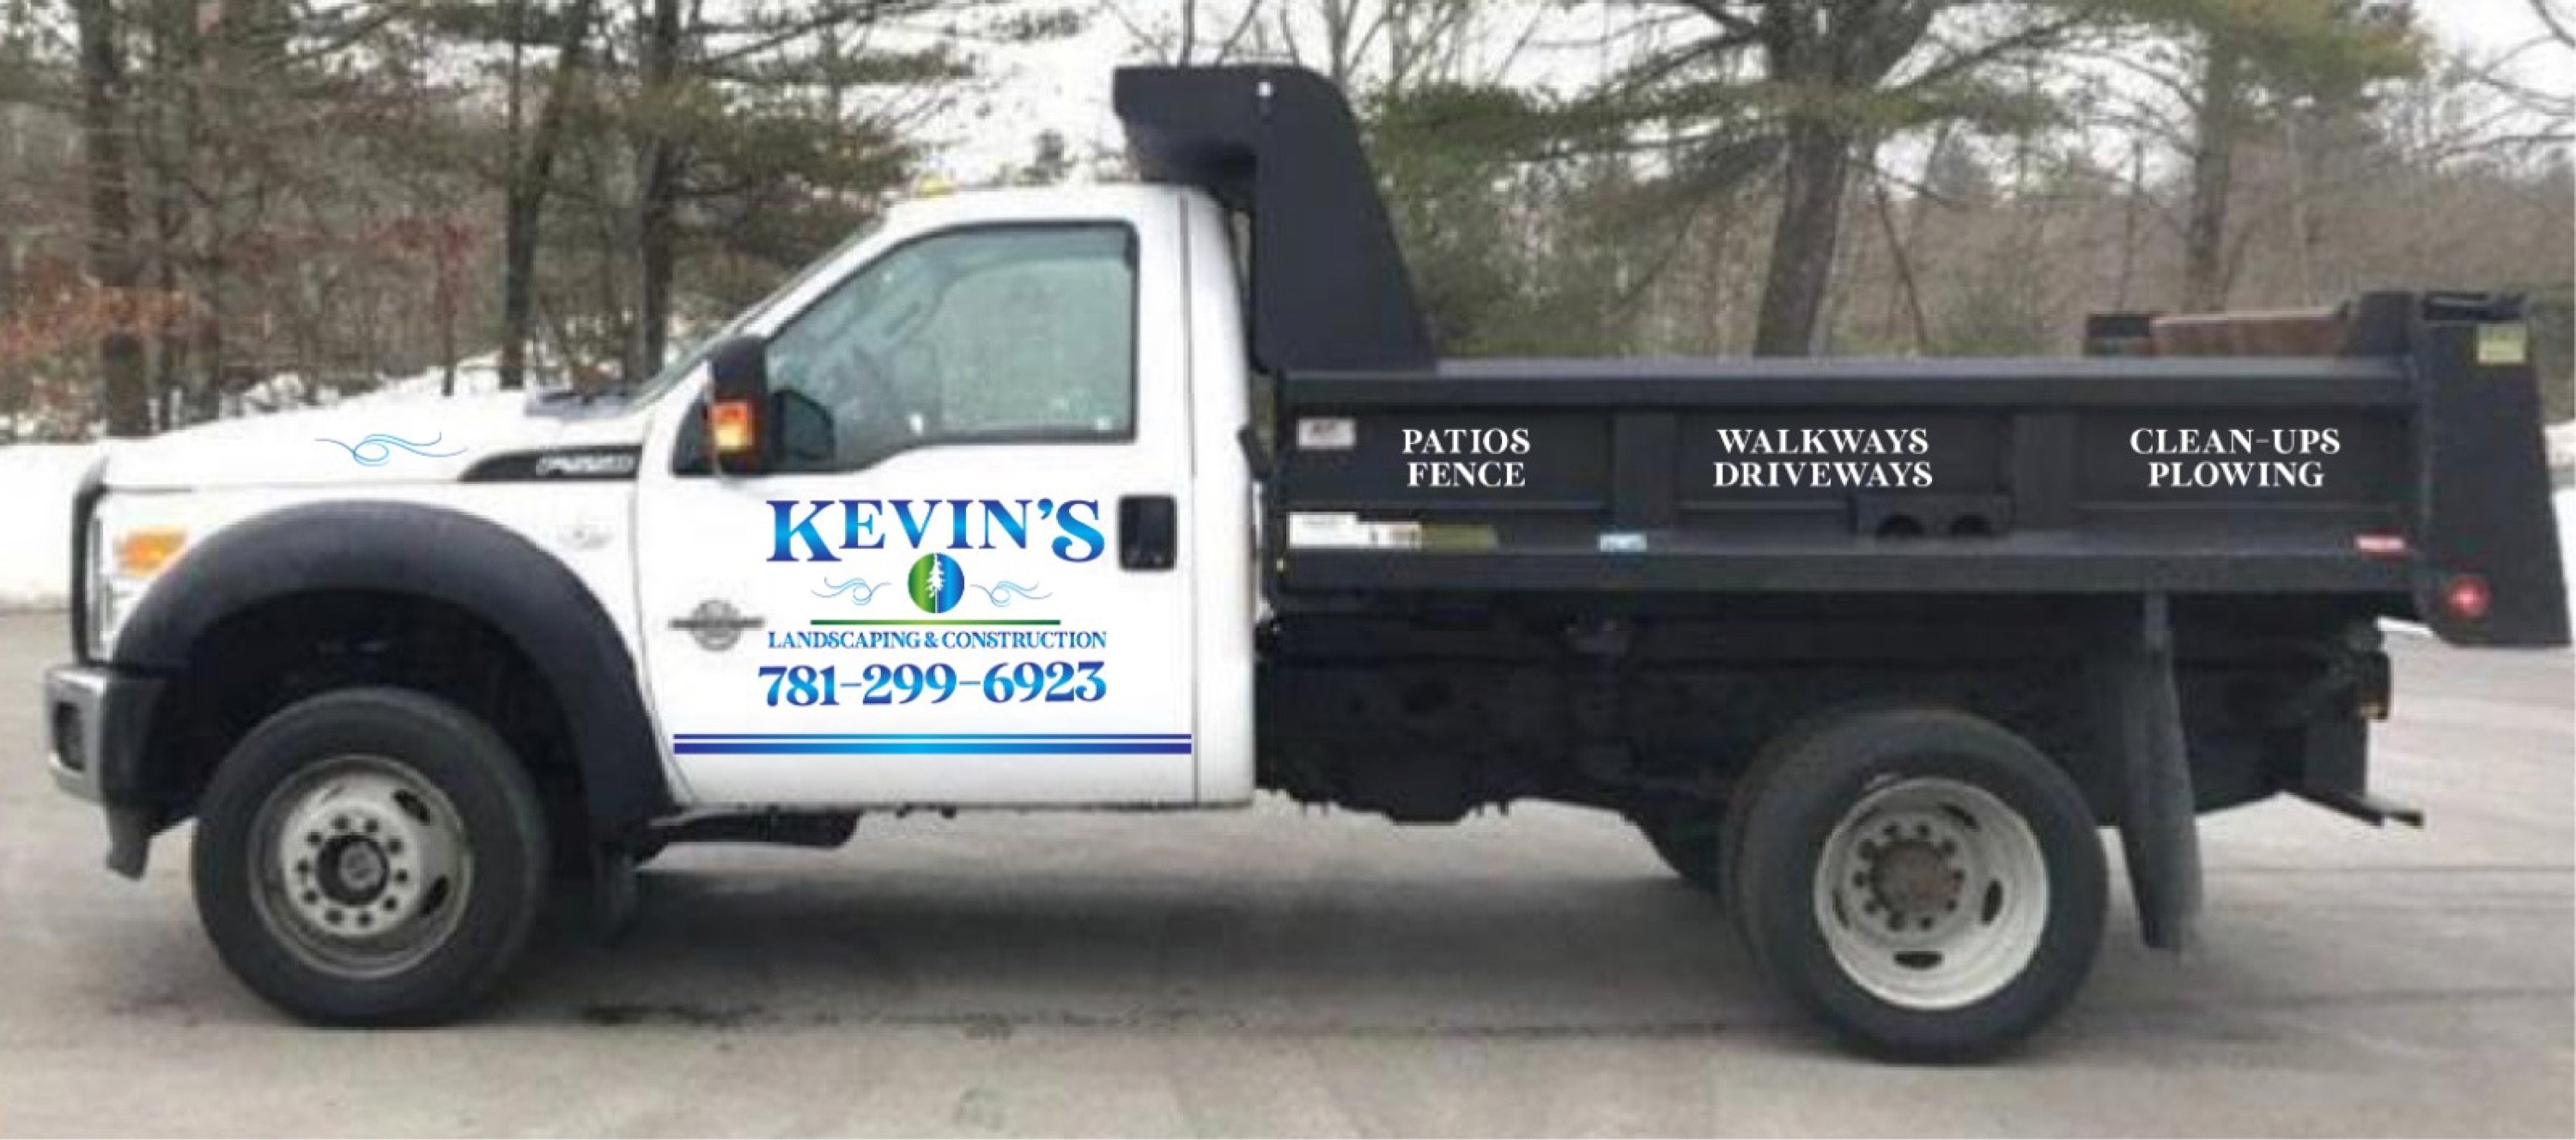 Kevin's Landscaping & Construction Logo